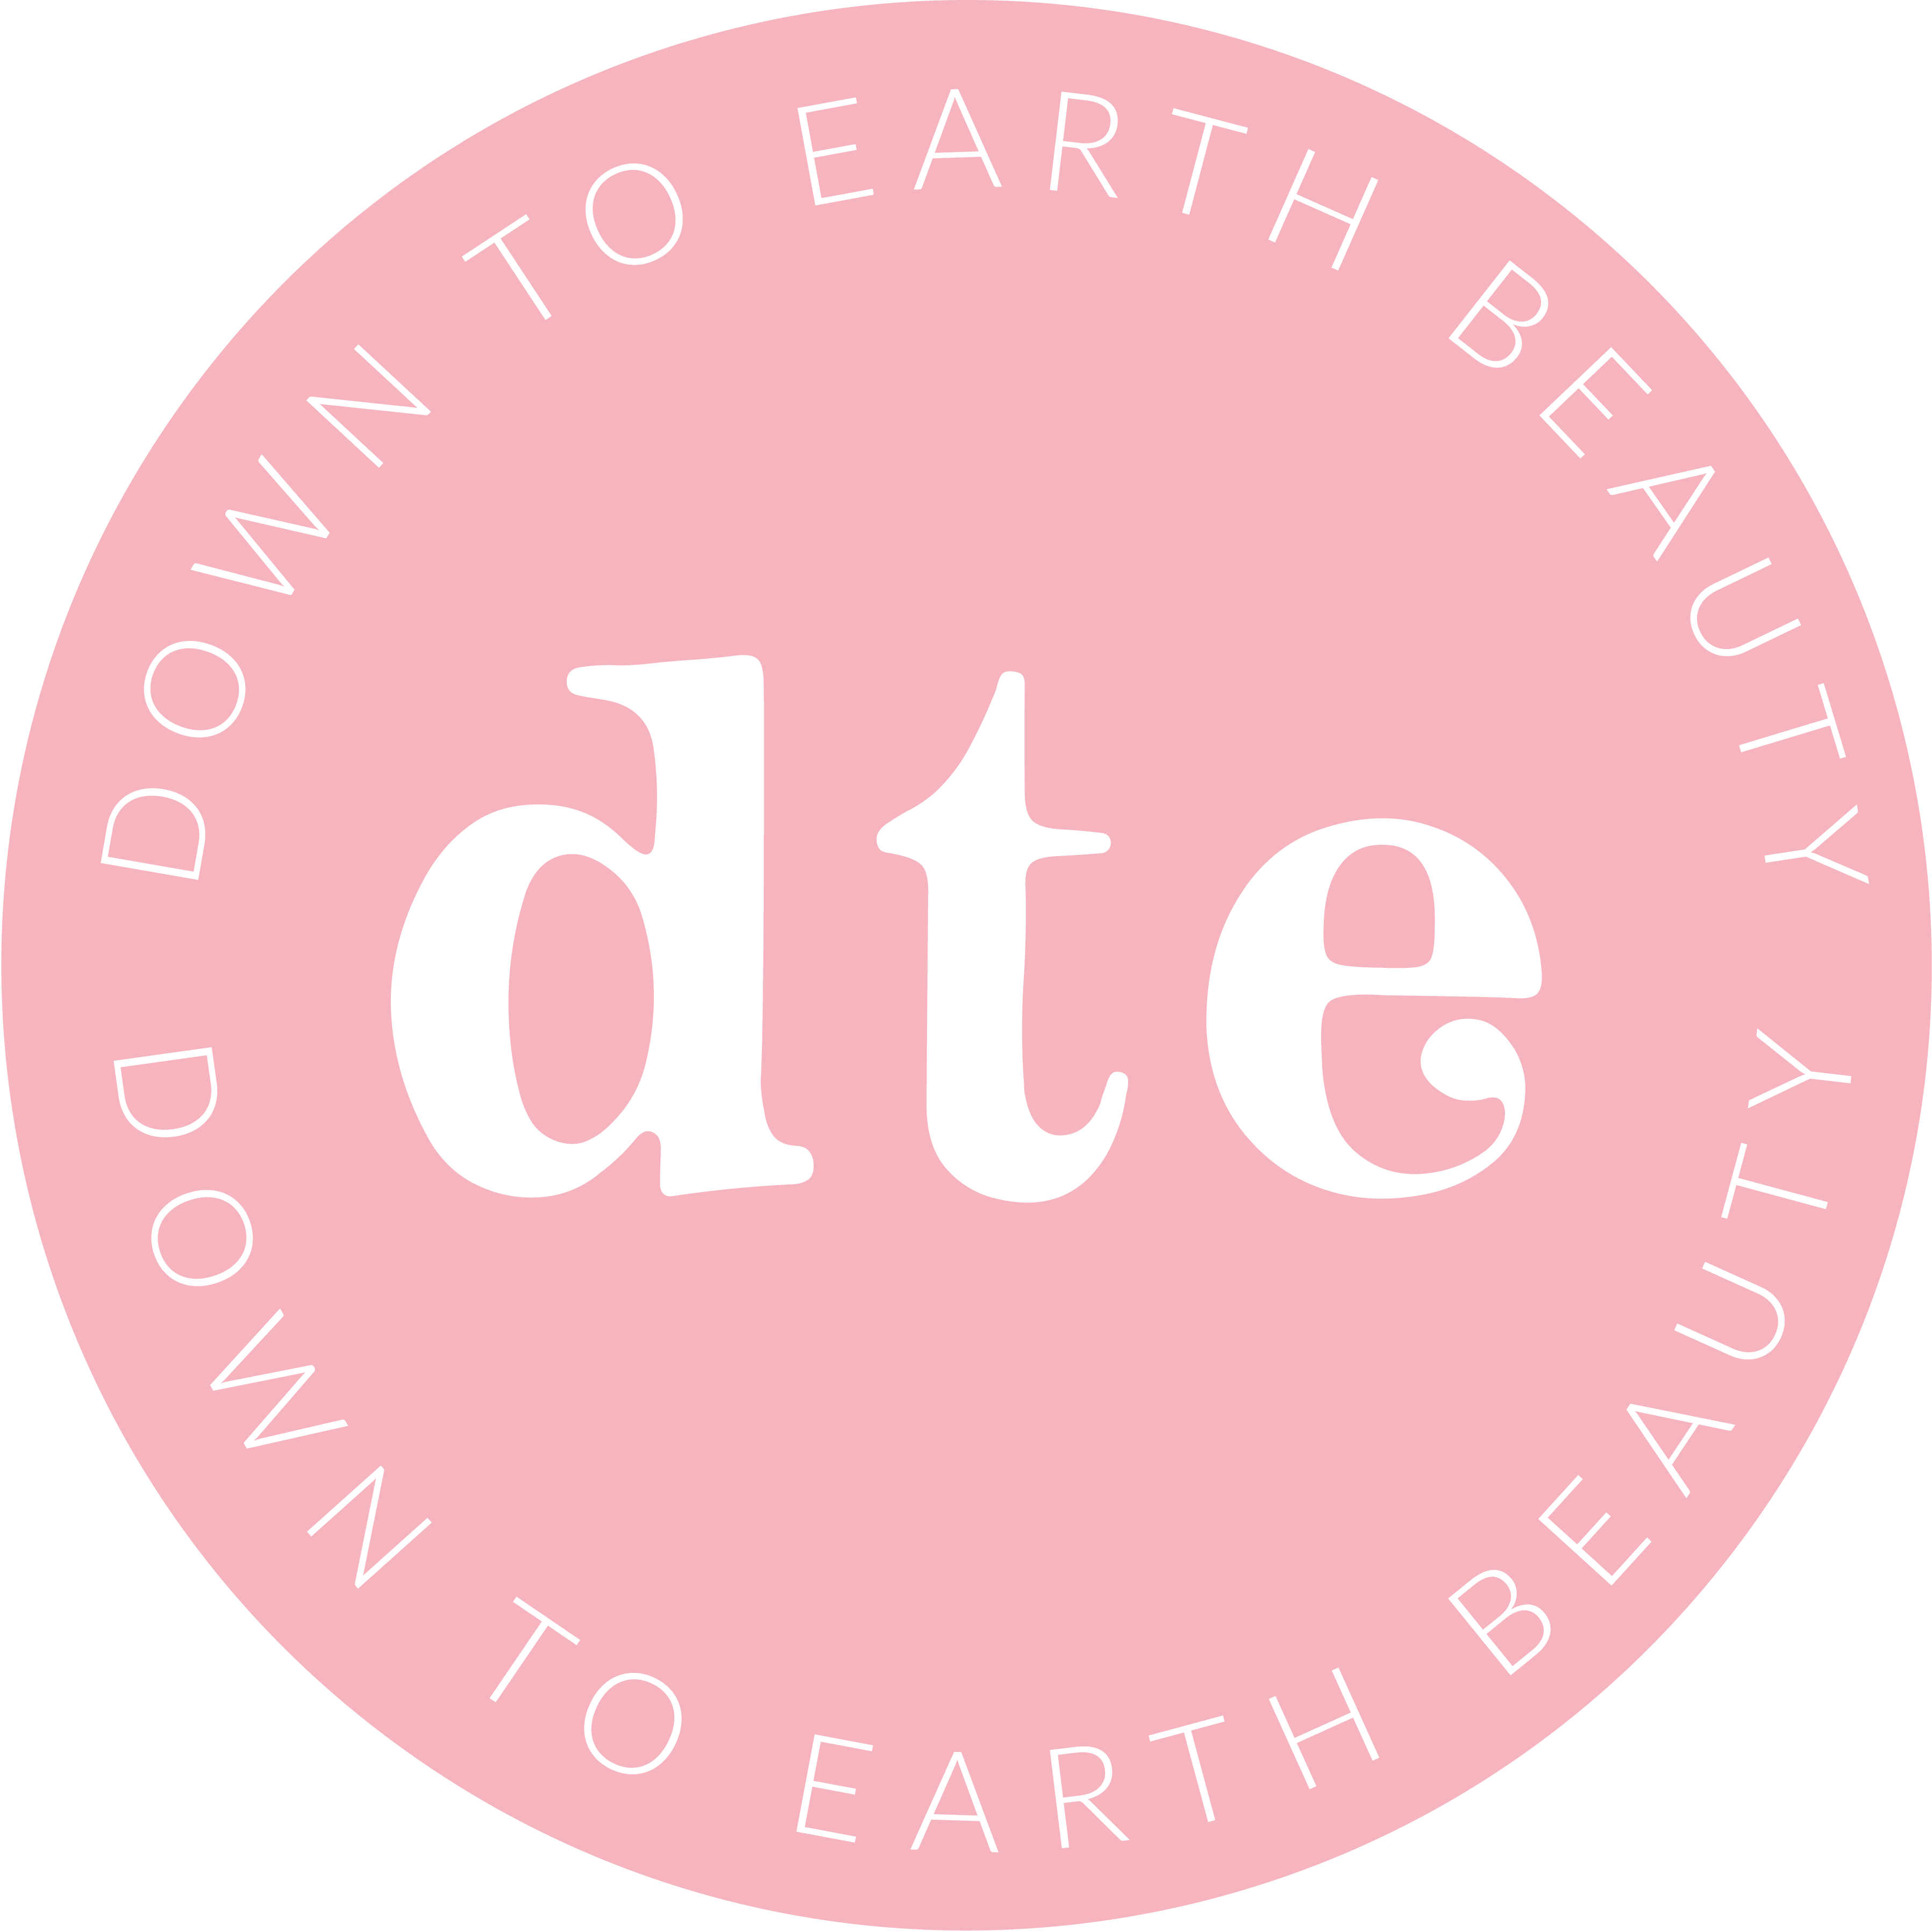 Down to Earth Beauty LLC